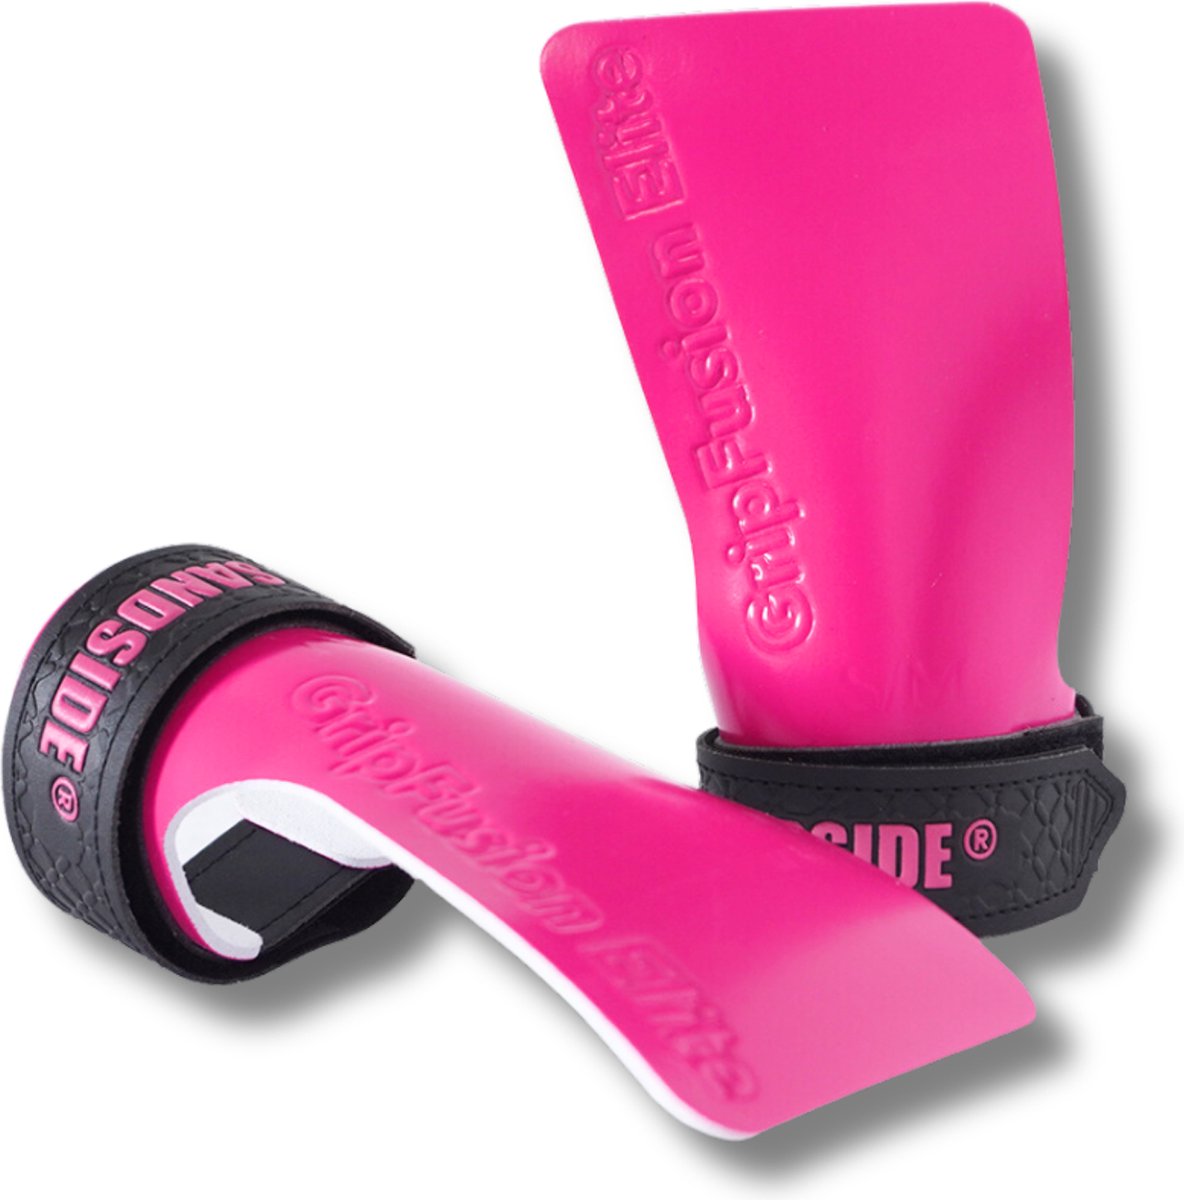 Sandside CrossFit Grips Elite 2.0 - Sticky Hand Grips - No Chalk - Fitness Handschoenen - Fingerless Grips - Hot Pink L/XL